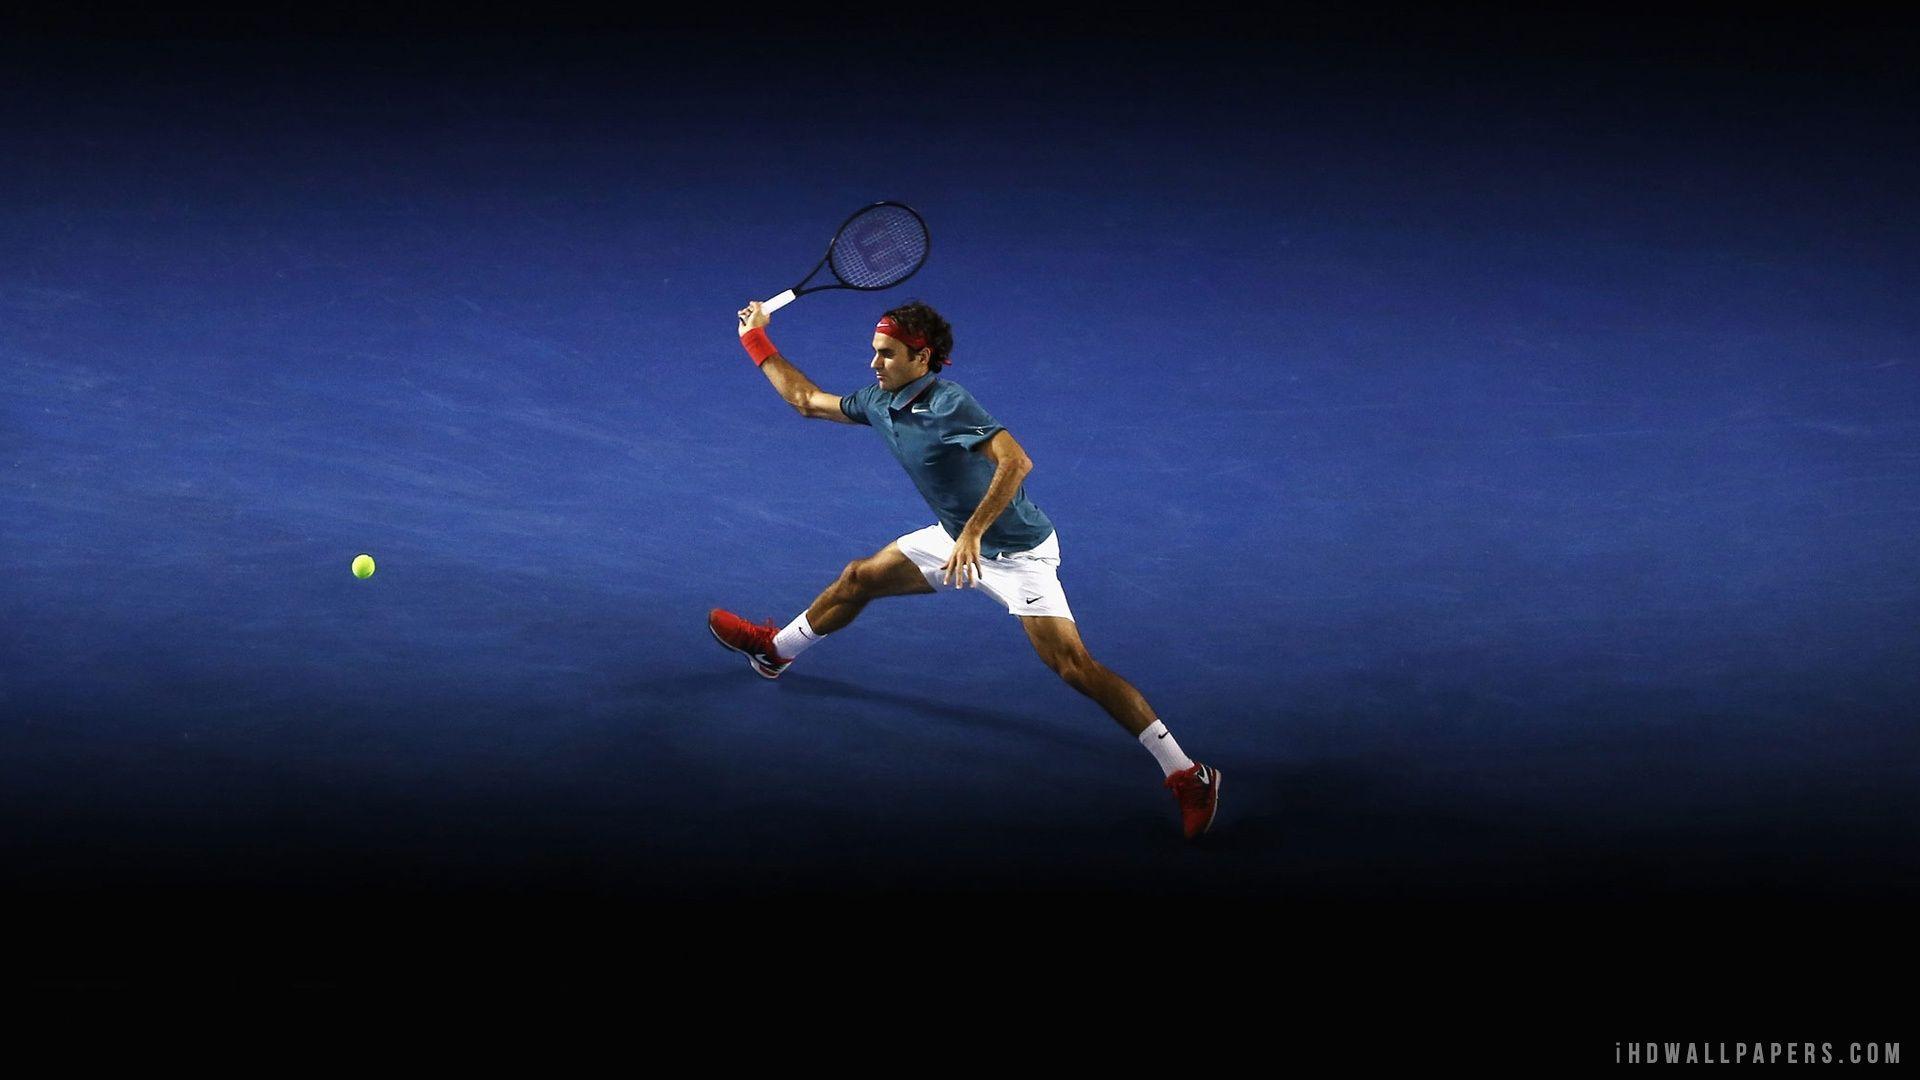 In Gallery: Roger Federer Wimbledon Wallpaper, 49 Roger Federer